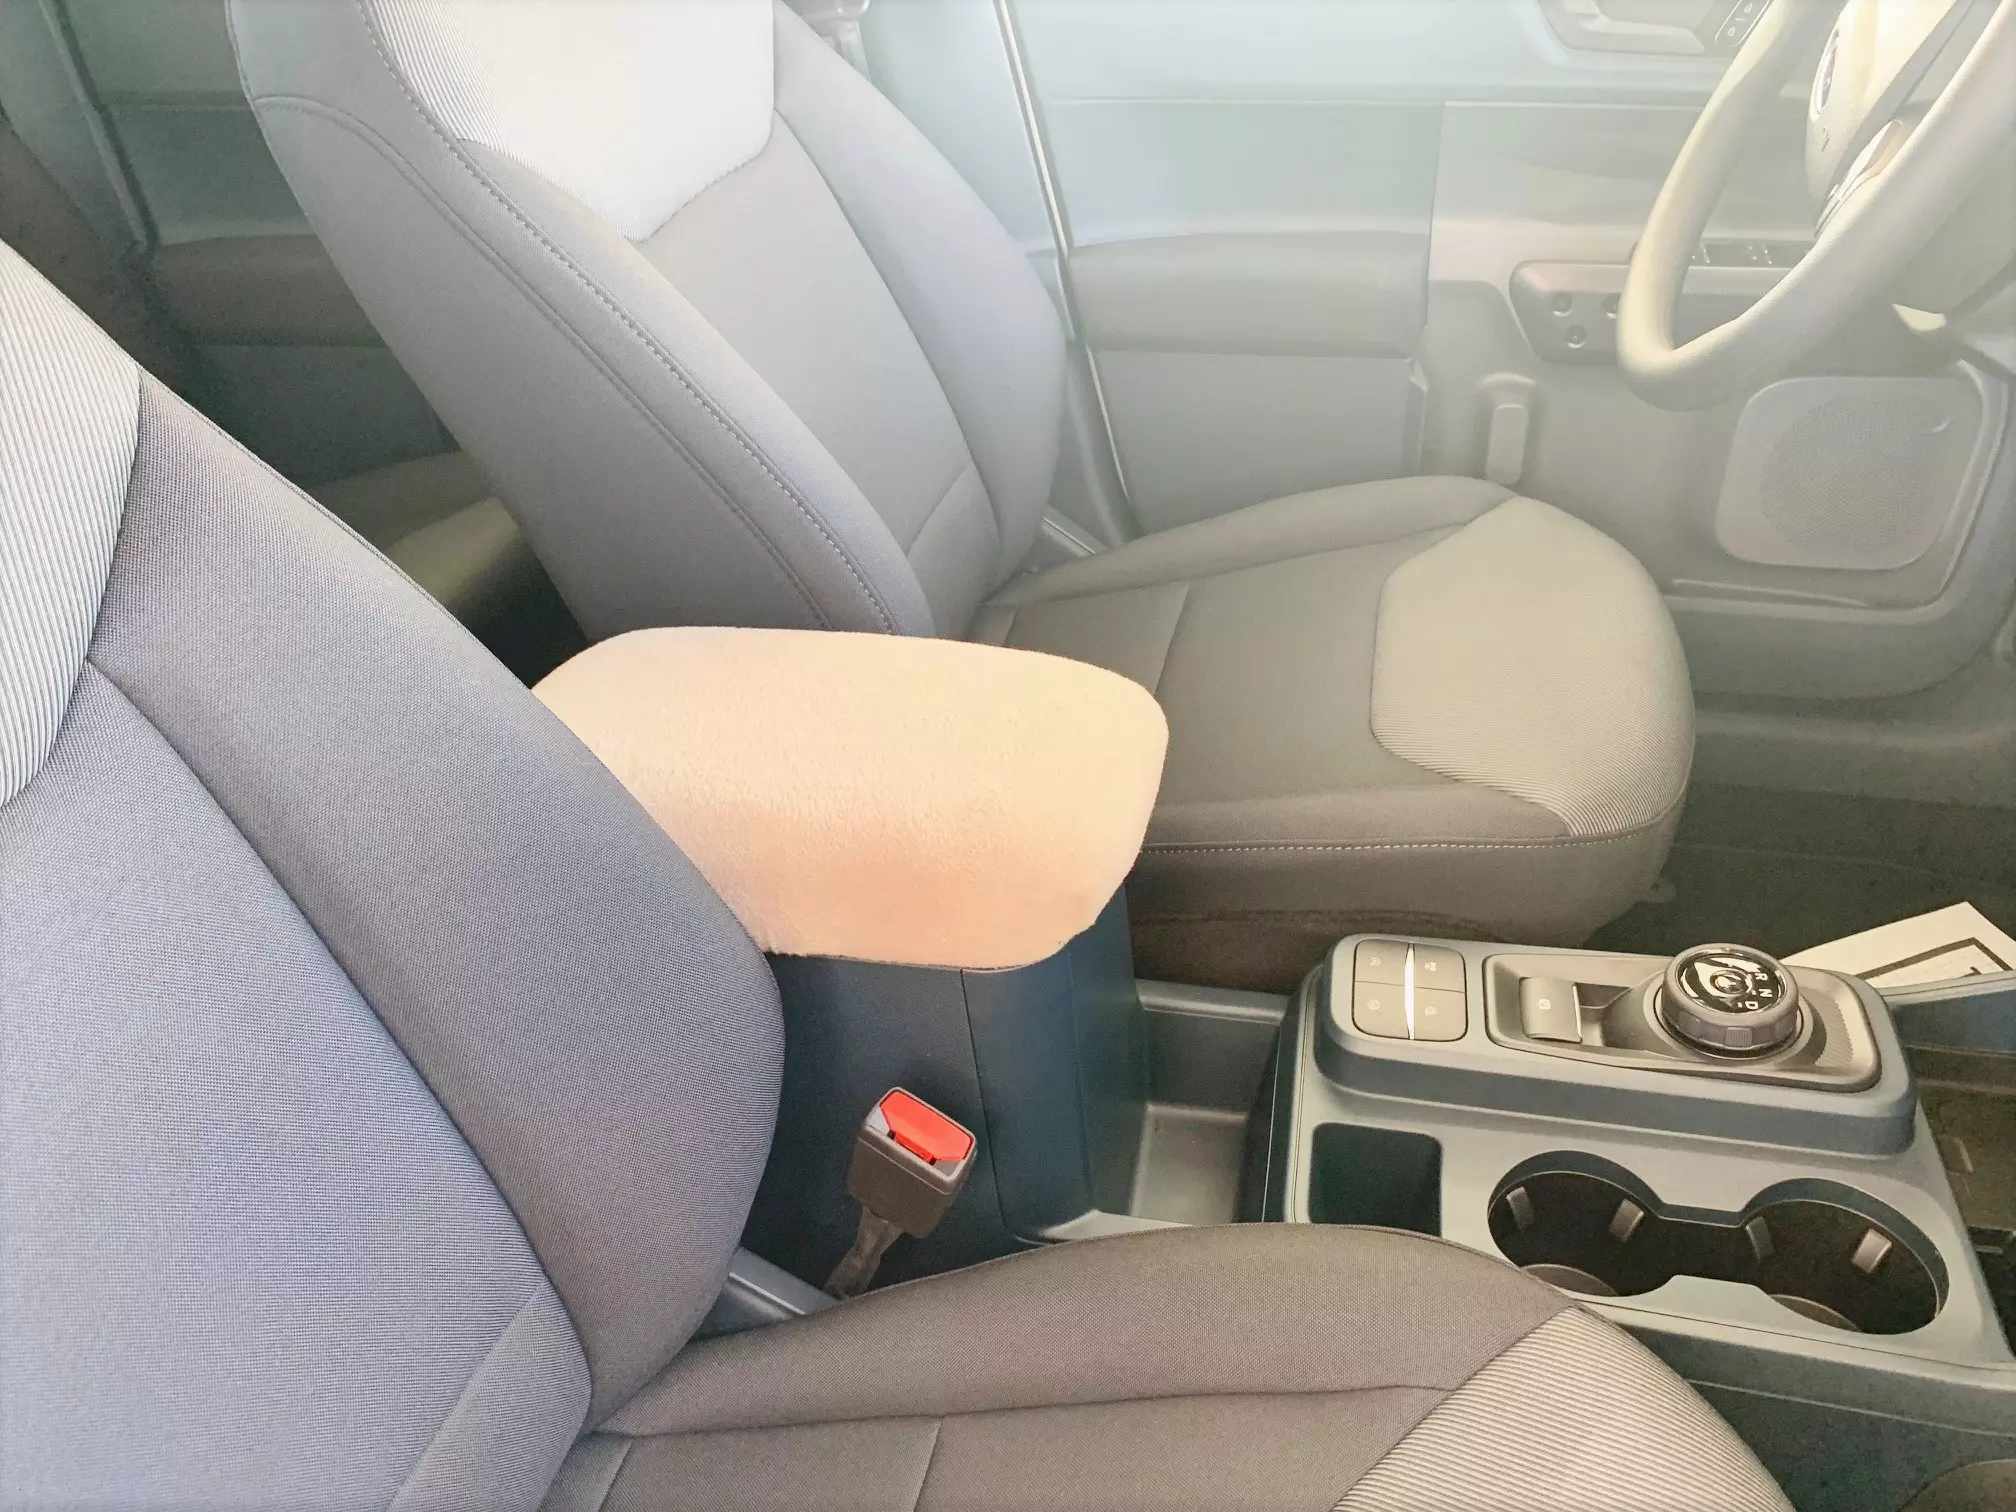 Buy Fleece Center Console Armrest Cover fits the Hyundai Tucson 2016-2020 